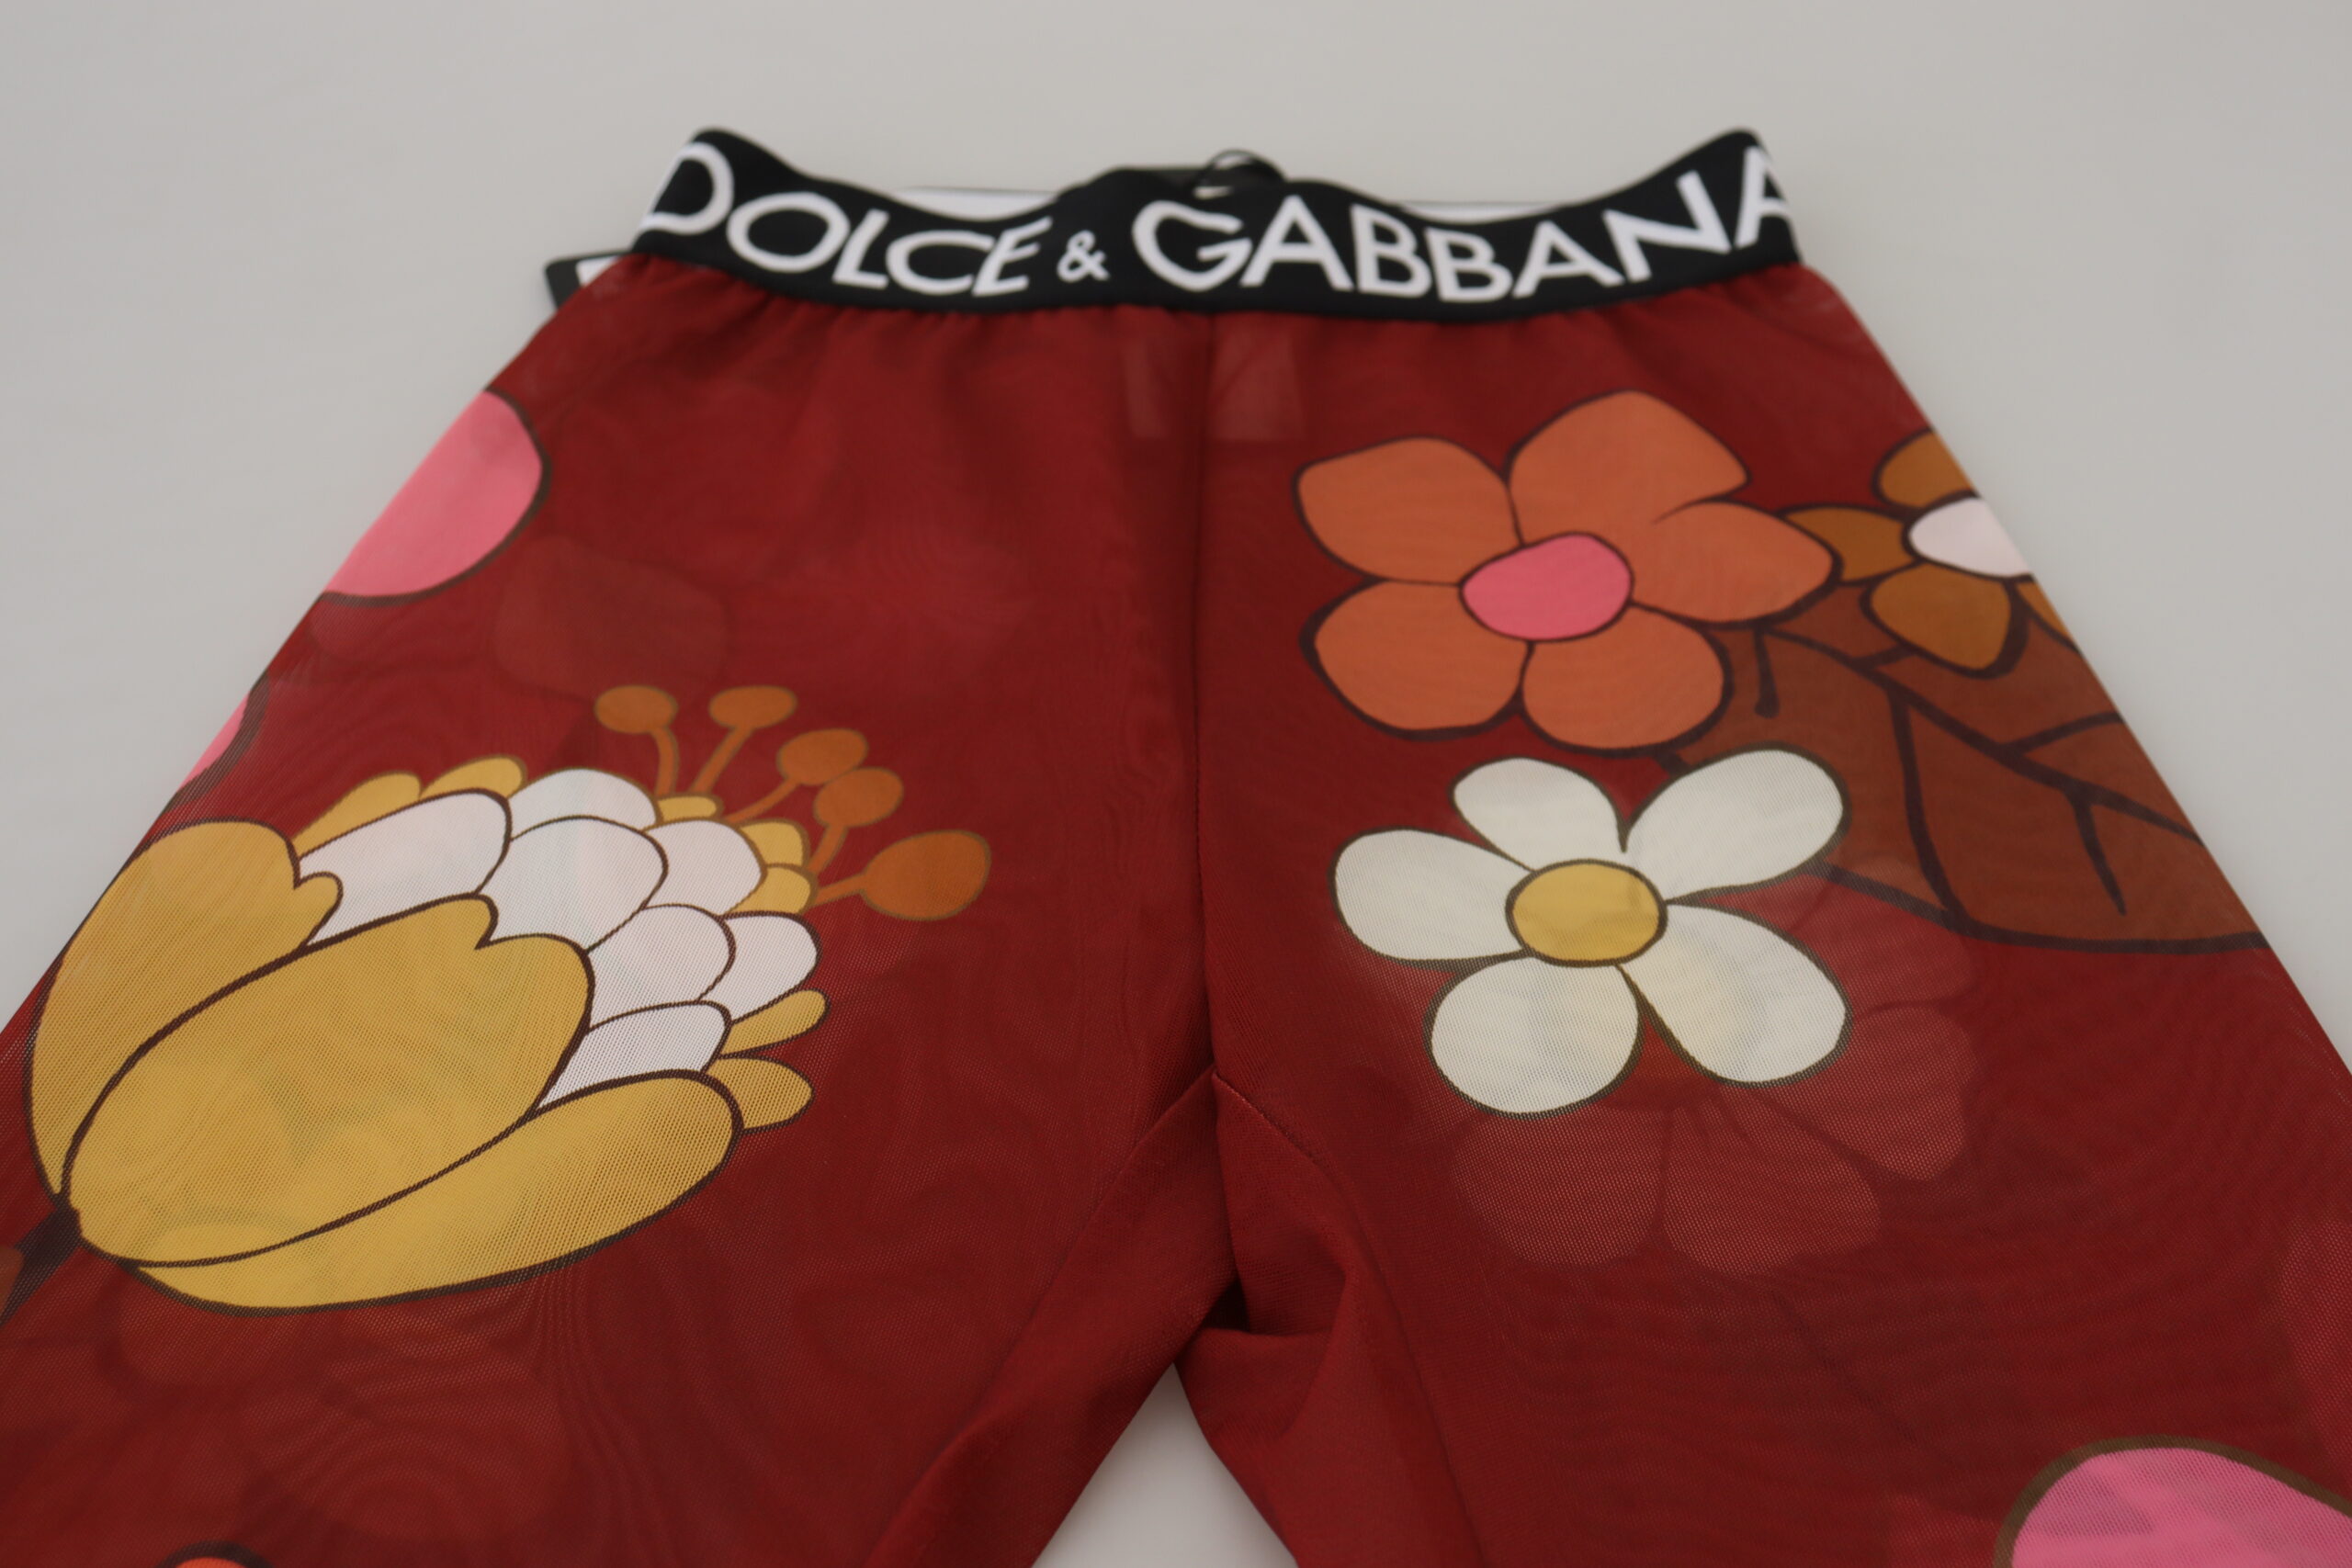 Dolce & Gabbana Floral Print Leggings 38 IT at FORZIERI